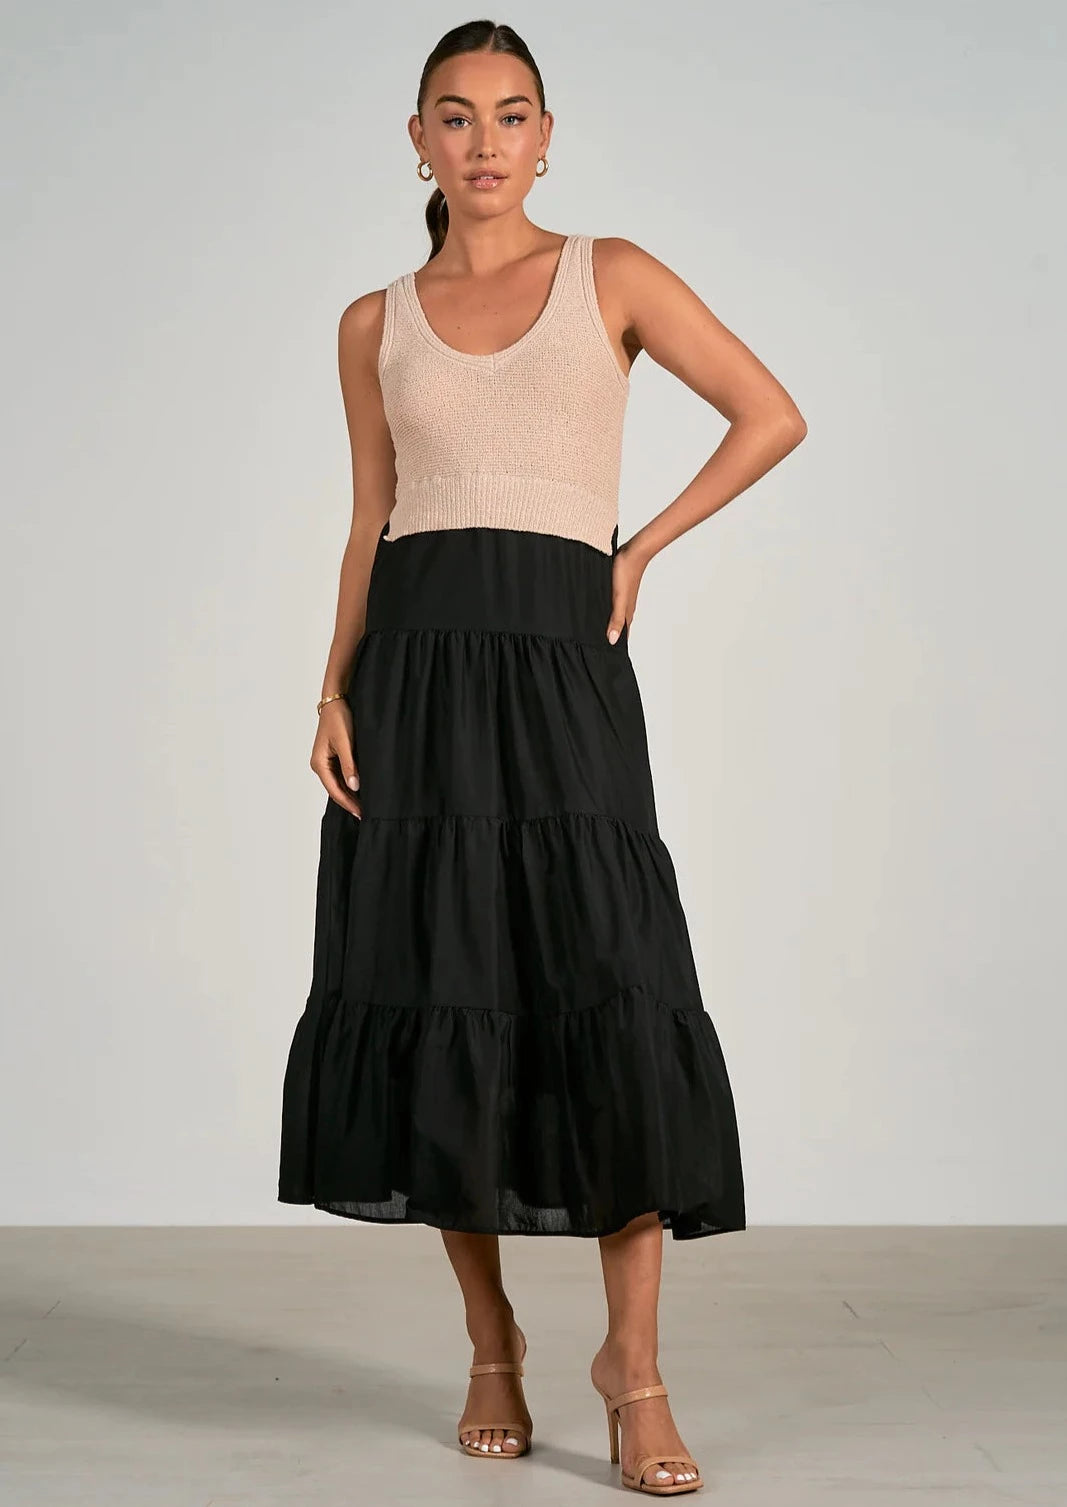 Elan Woven & Knit Maxi Dress - Black/Natural